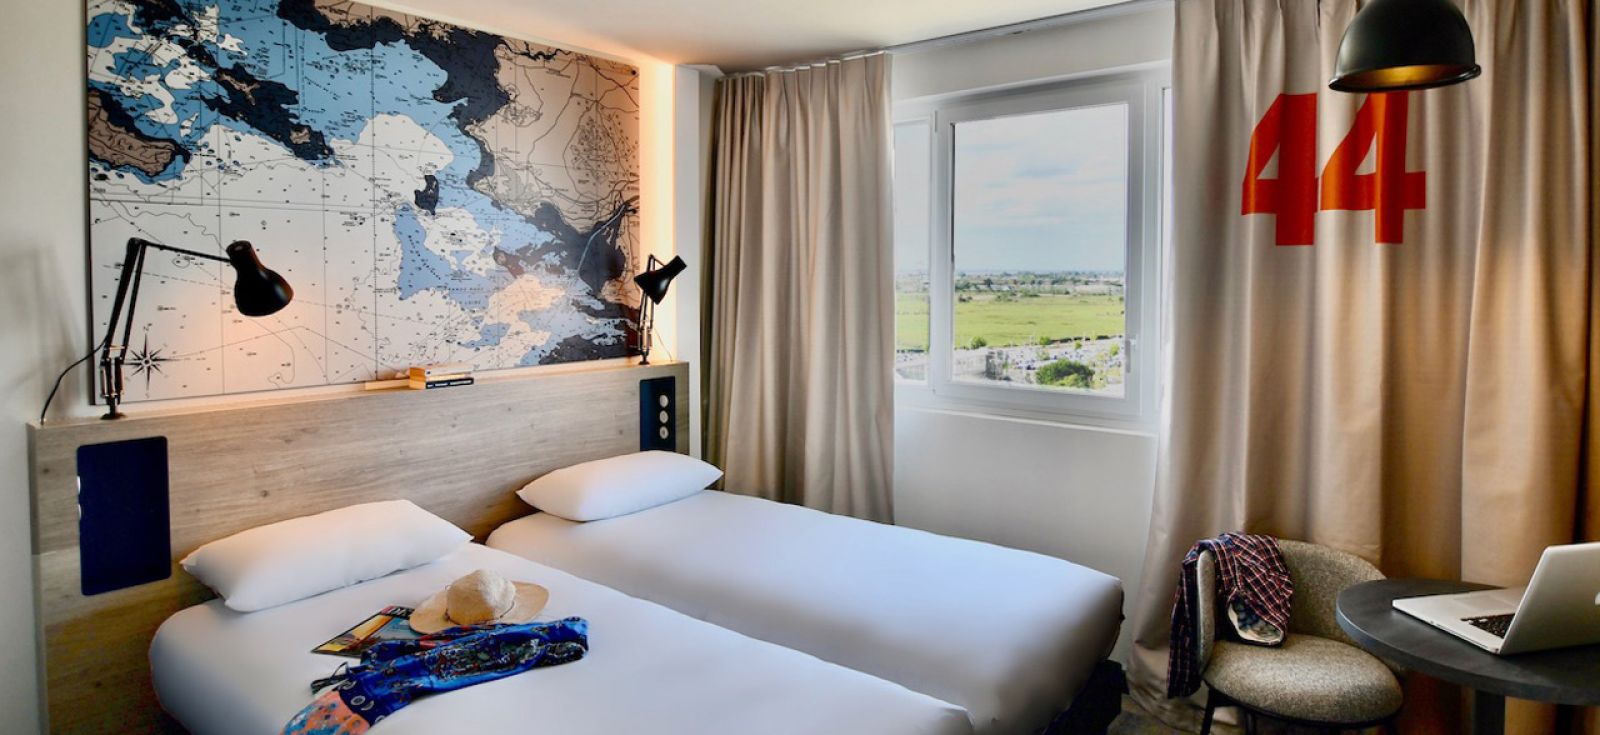 Chambre 2 lits simples hotel ibis styles saint-nazaire